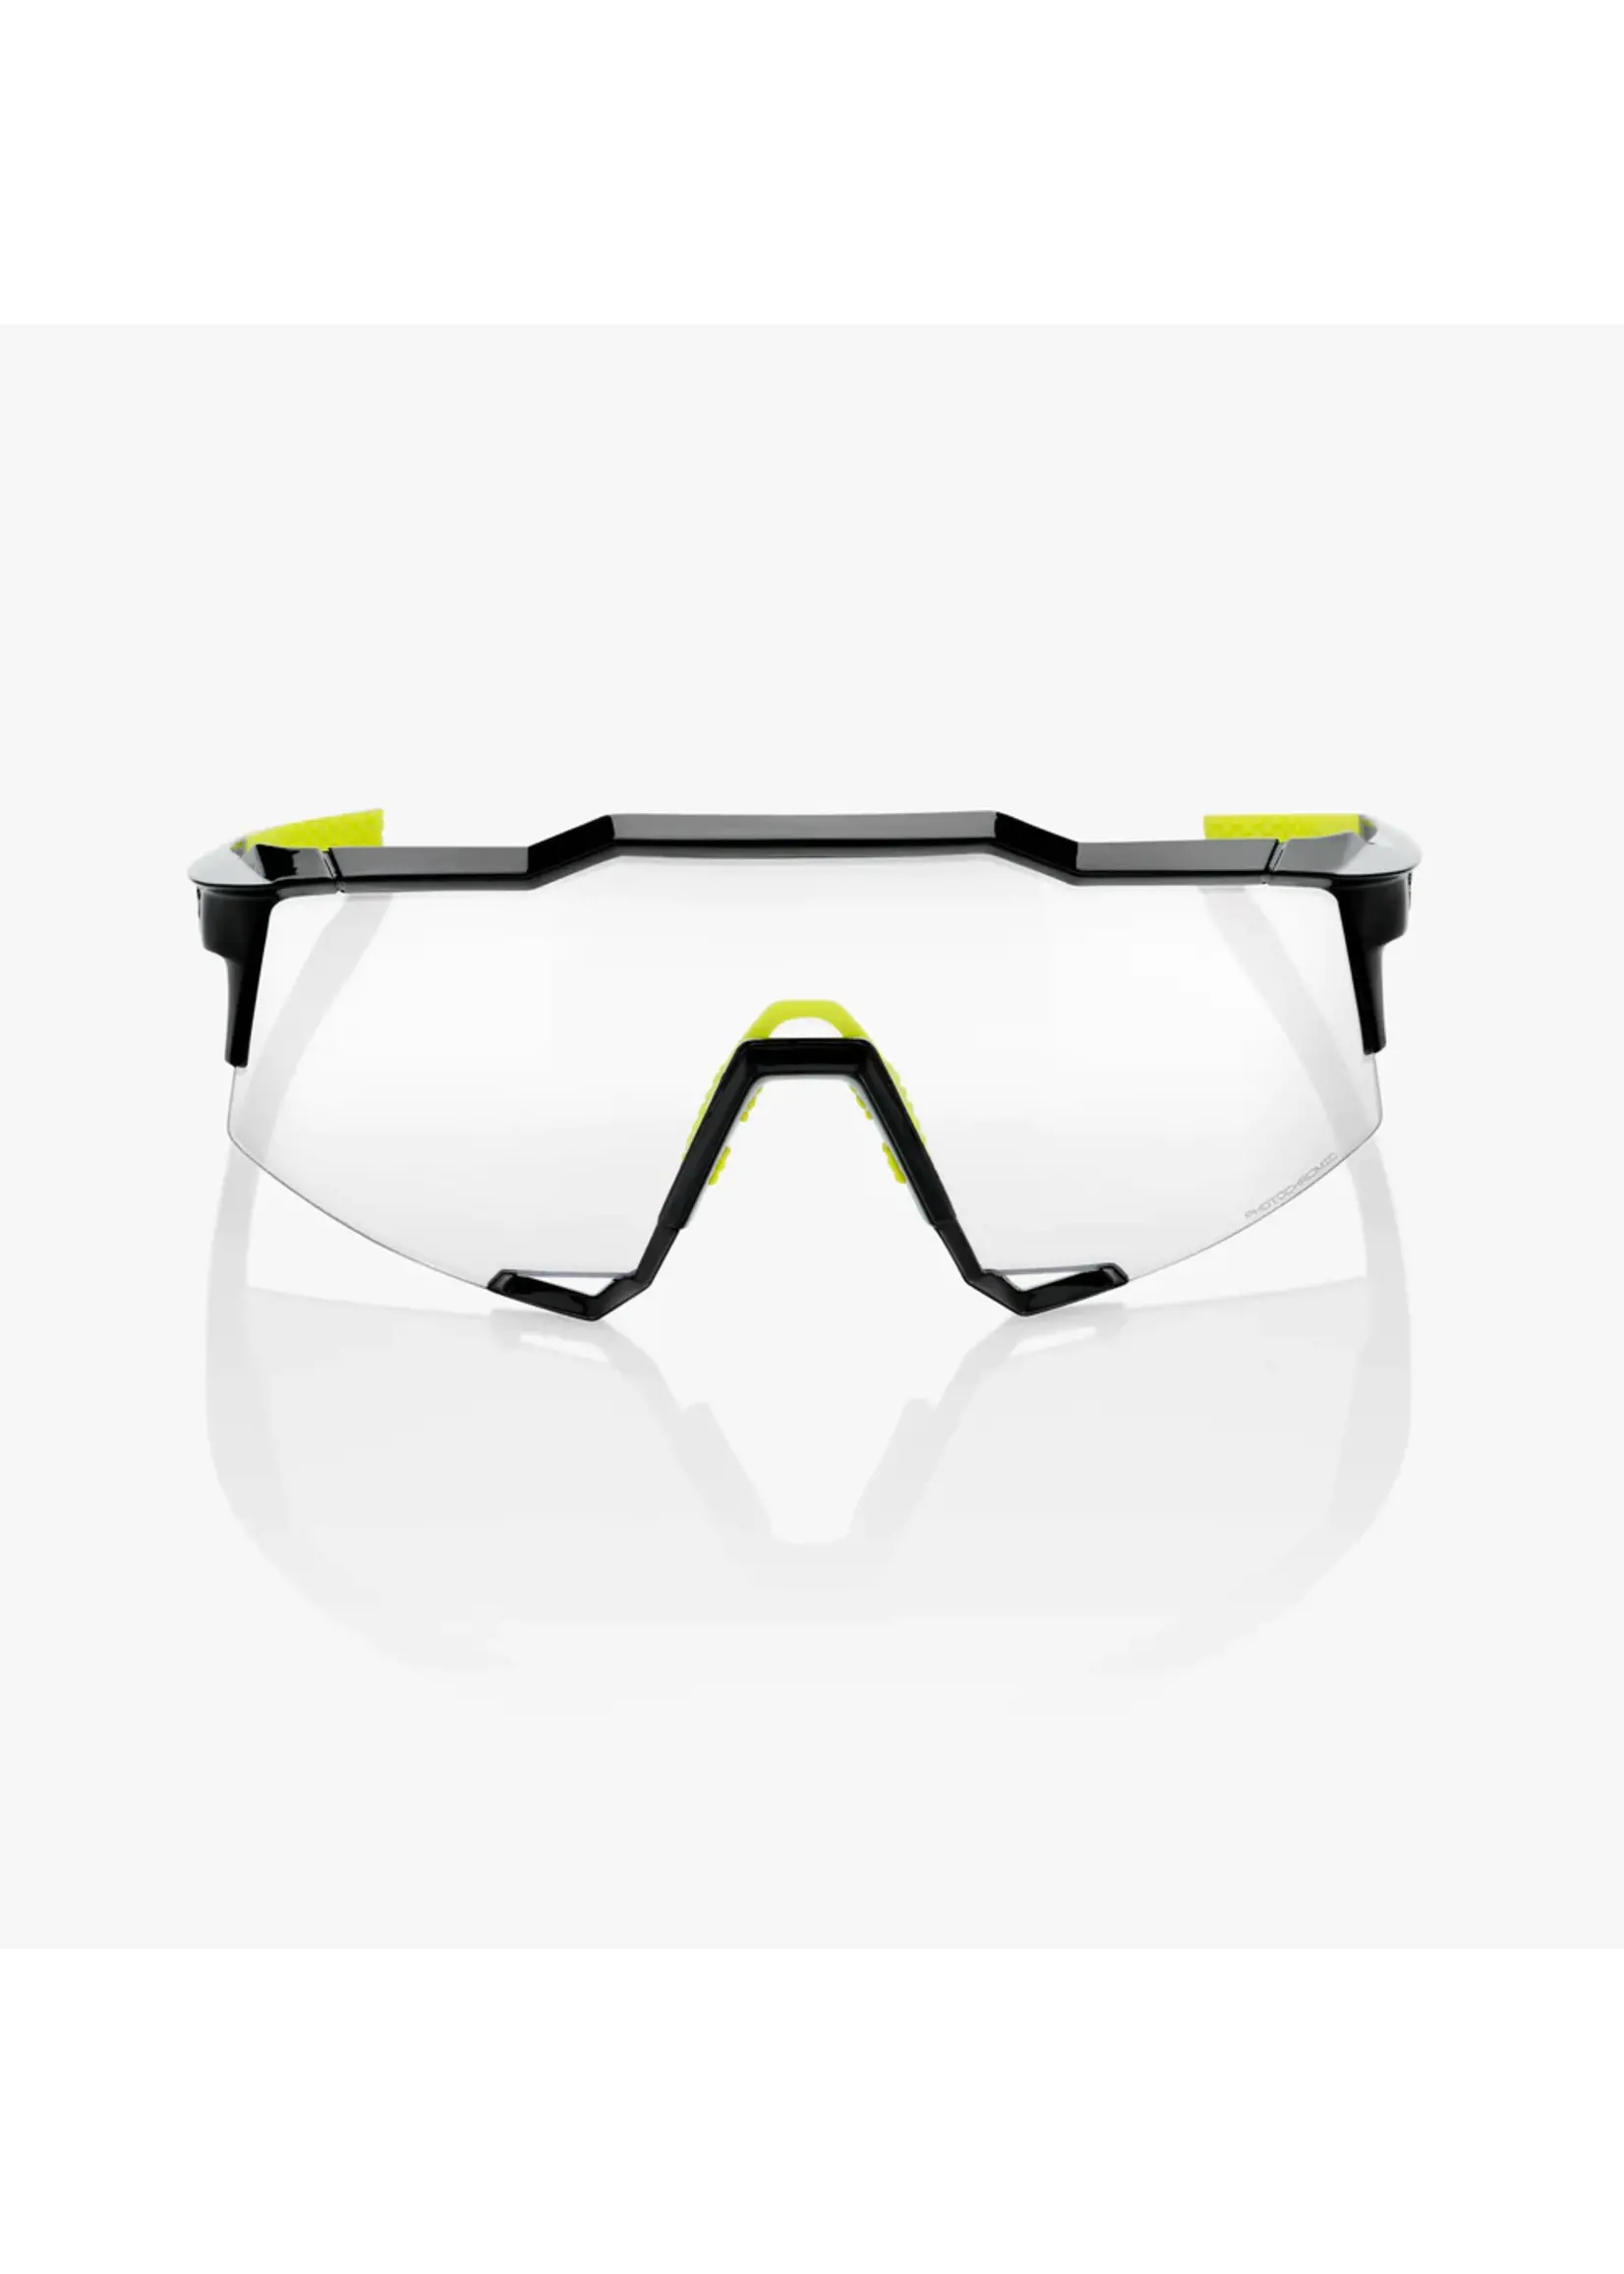 100 Percent 100% Speedcraft Sunglasses - Gloss Black - Photochromic Lens